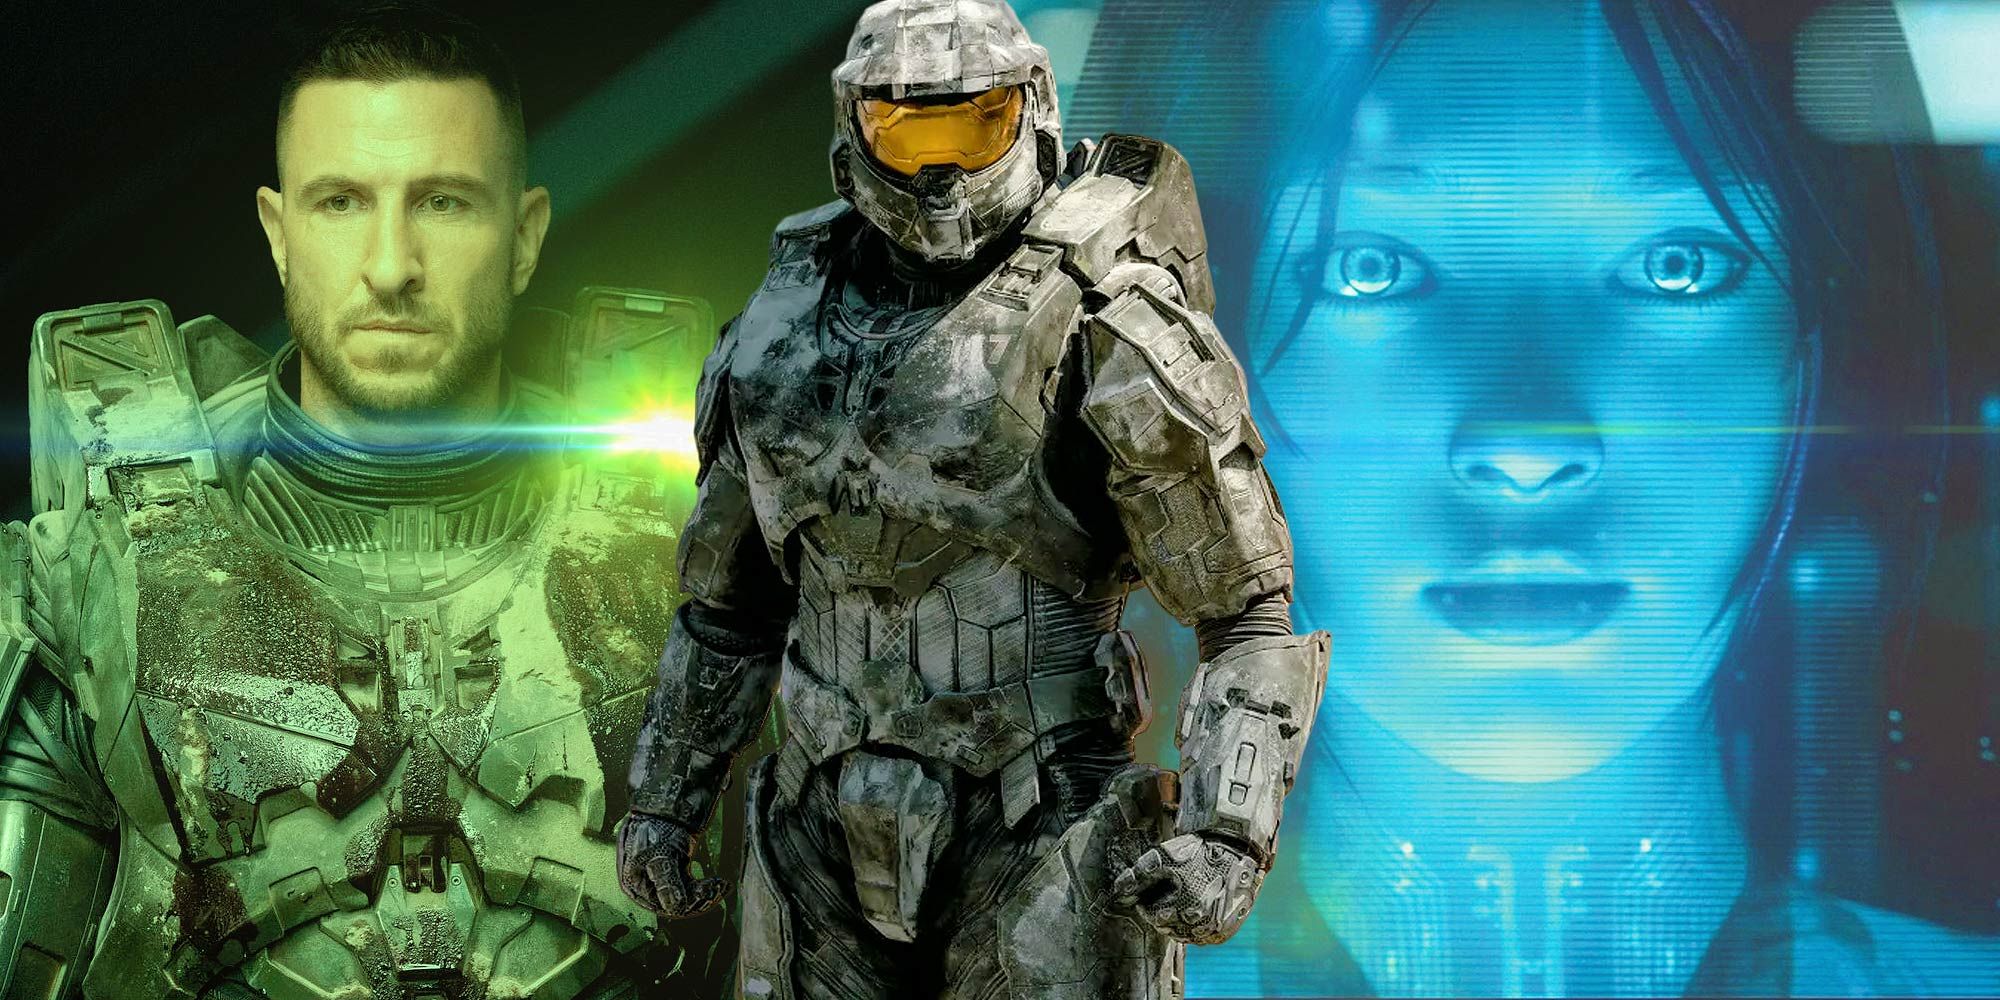 Halo season 2 can separate Cortana from John-117